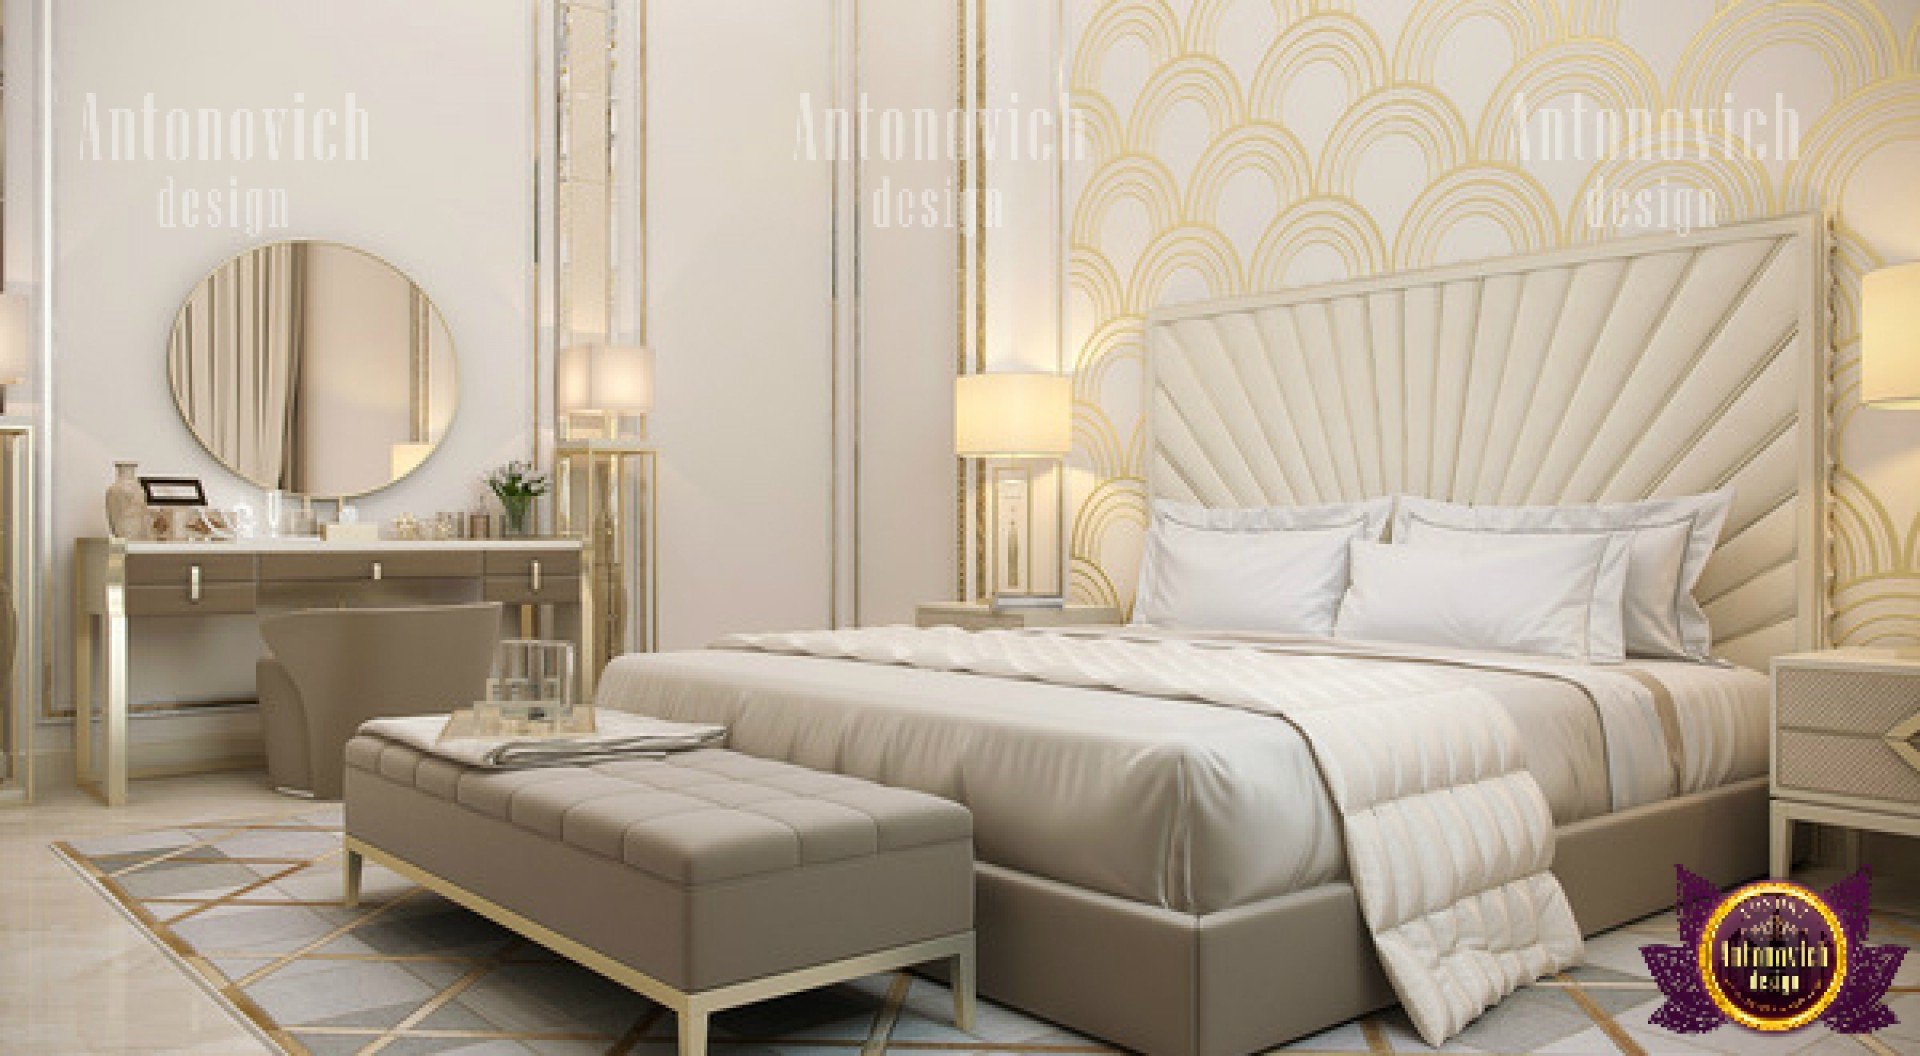 Luxurious Nigerian bedroom with stylish decor